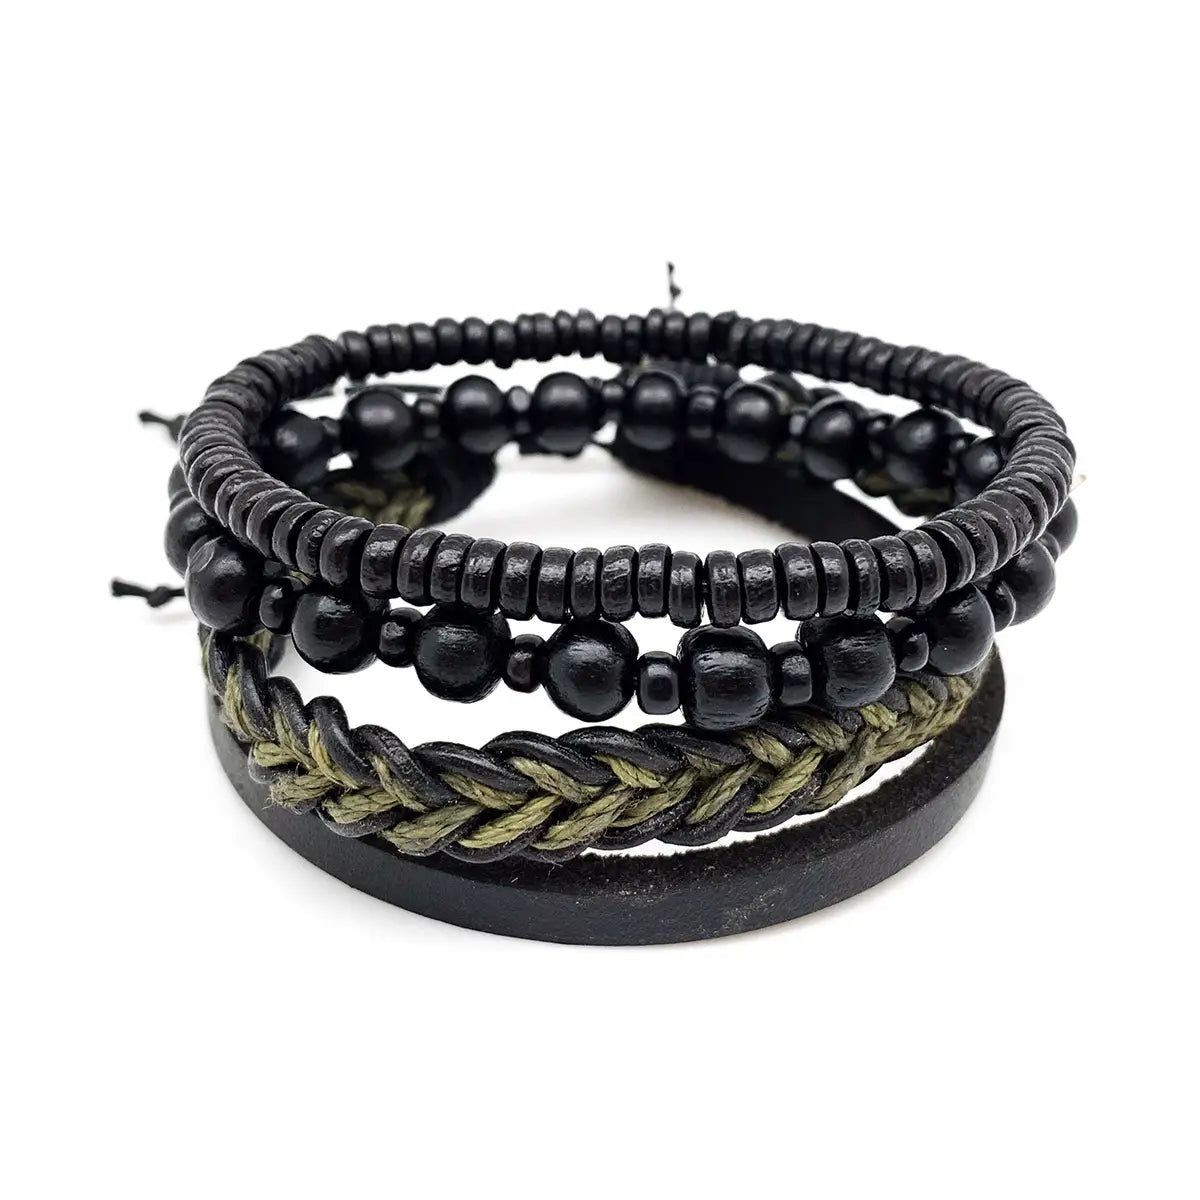 Green and Black Leather Black Beads Bracelet Set